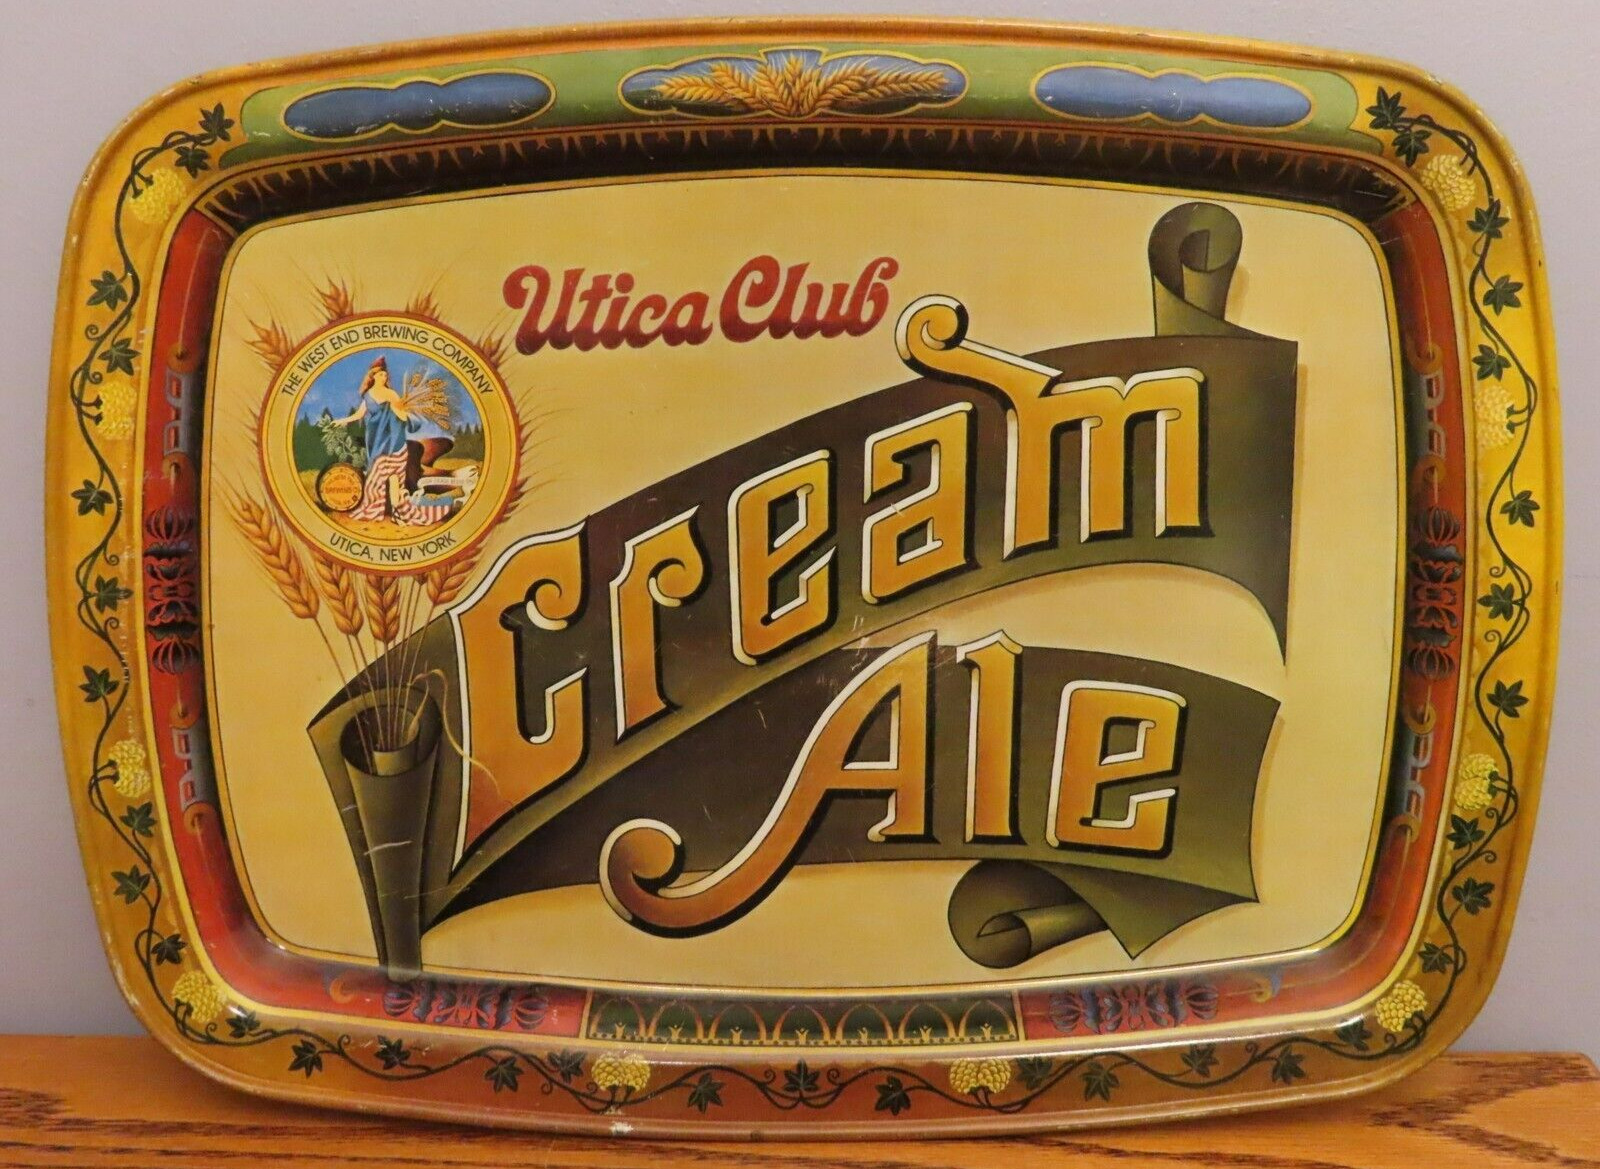 Vintage Utica Club Cream Ale West End Brewing Beer Rectangle Tray 